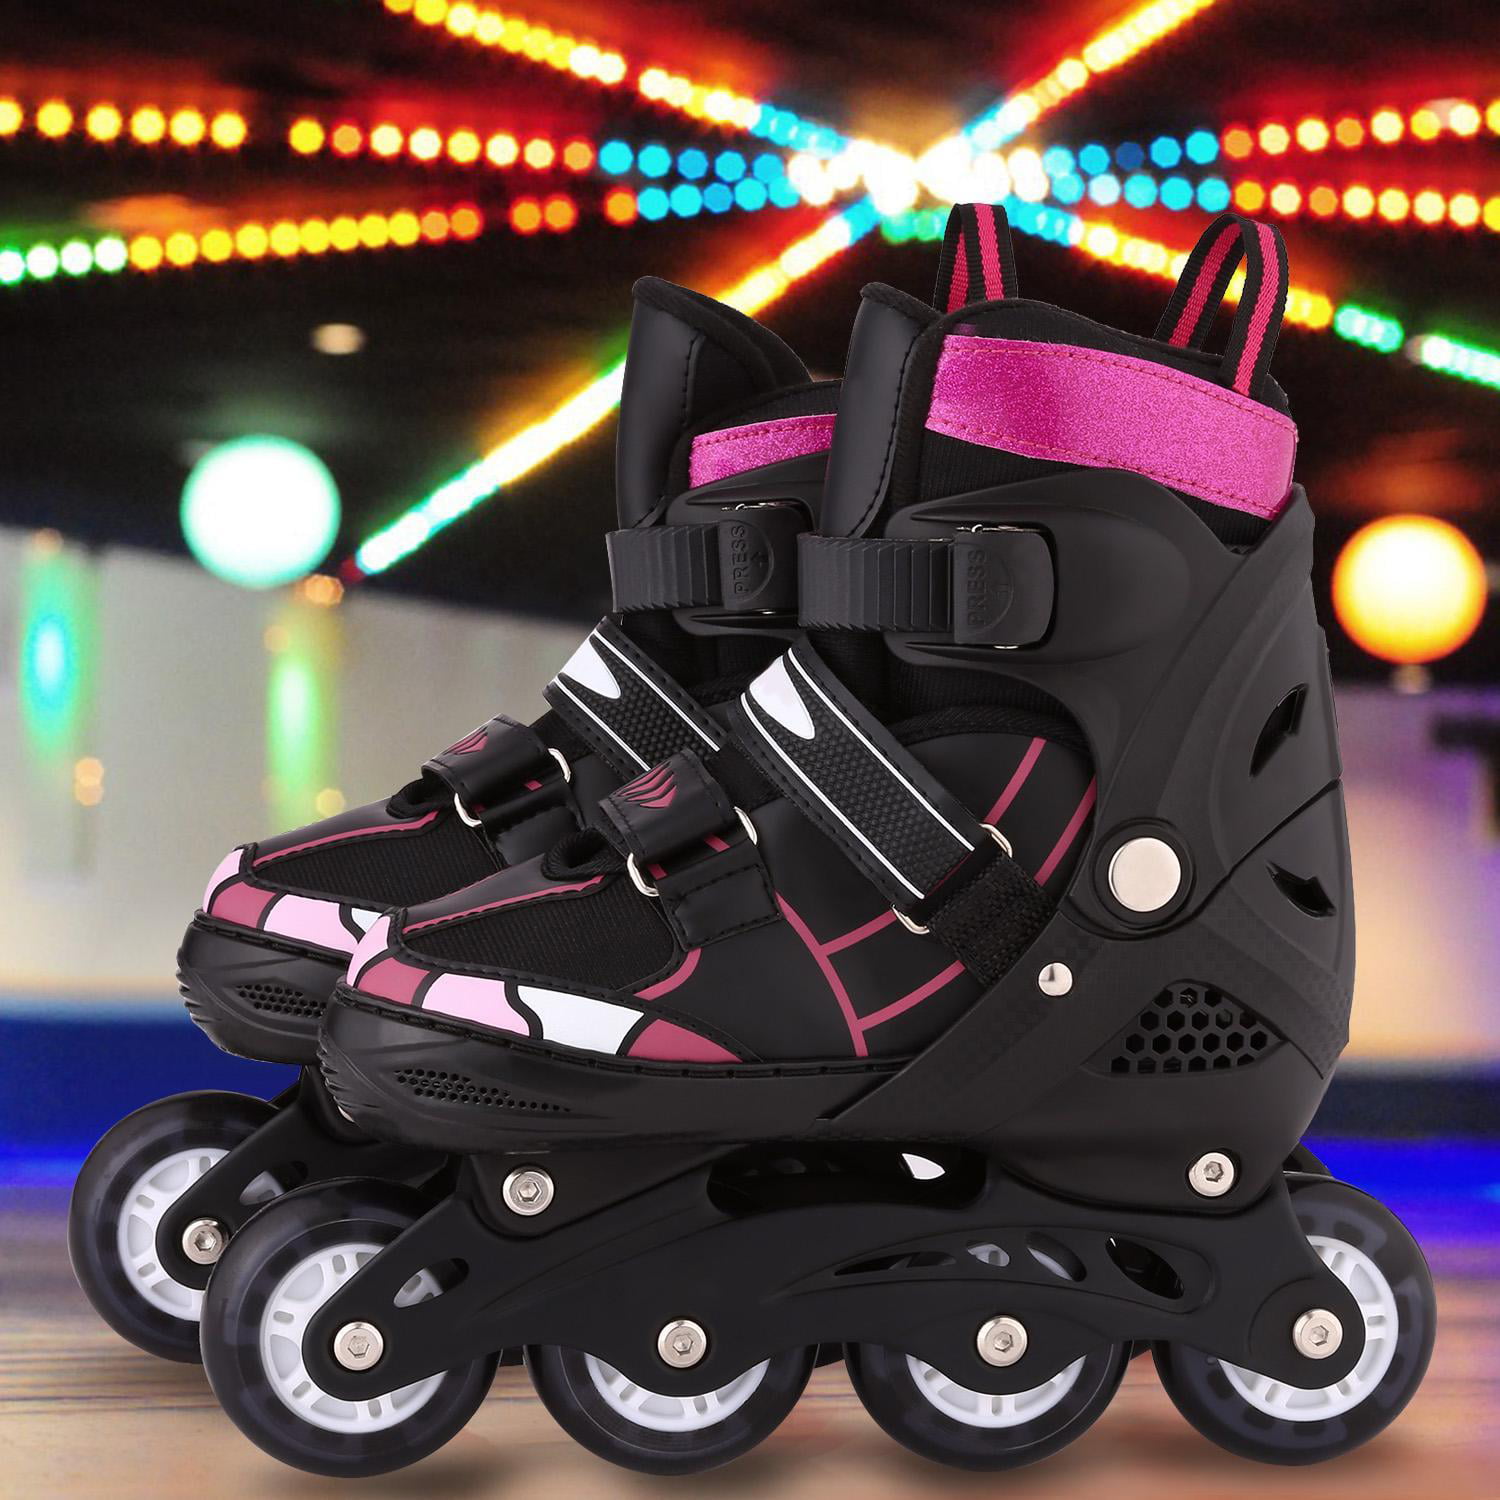 PowerRider Roller Skates for Girls Adjustable Skates for Boys Beginners Kids Roller Blades Pink with Flash LED Light Up Wheels Birthday Gifts